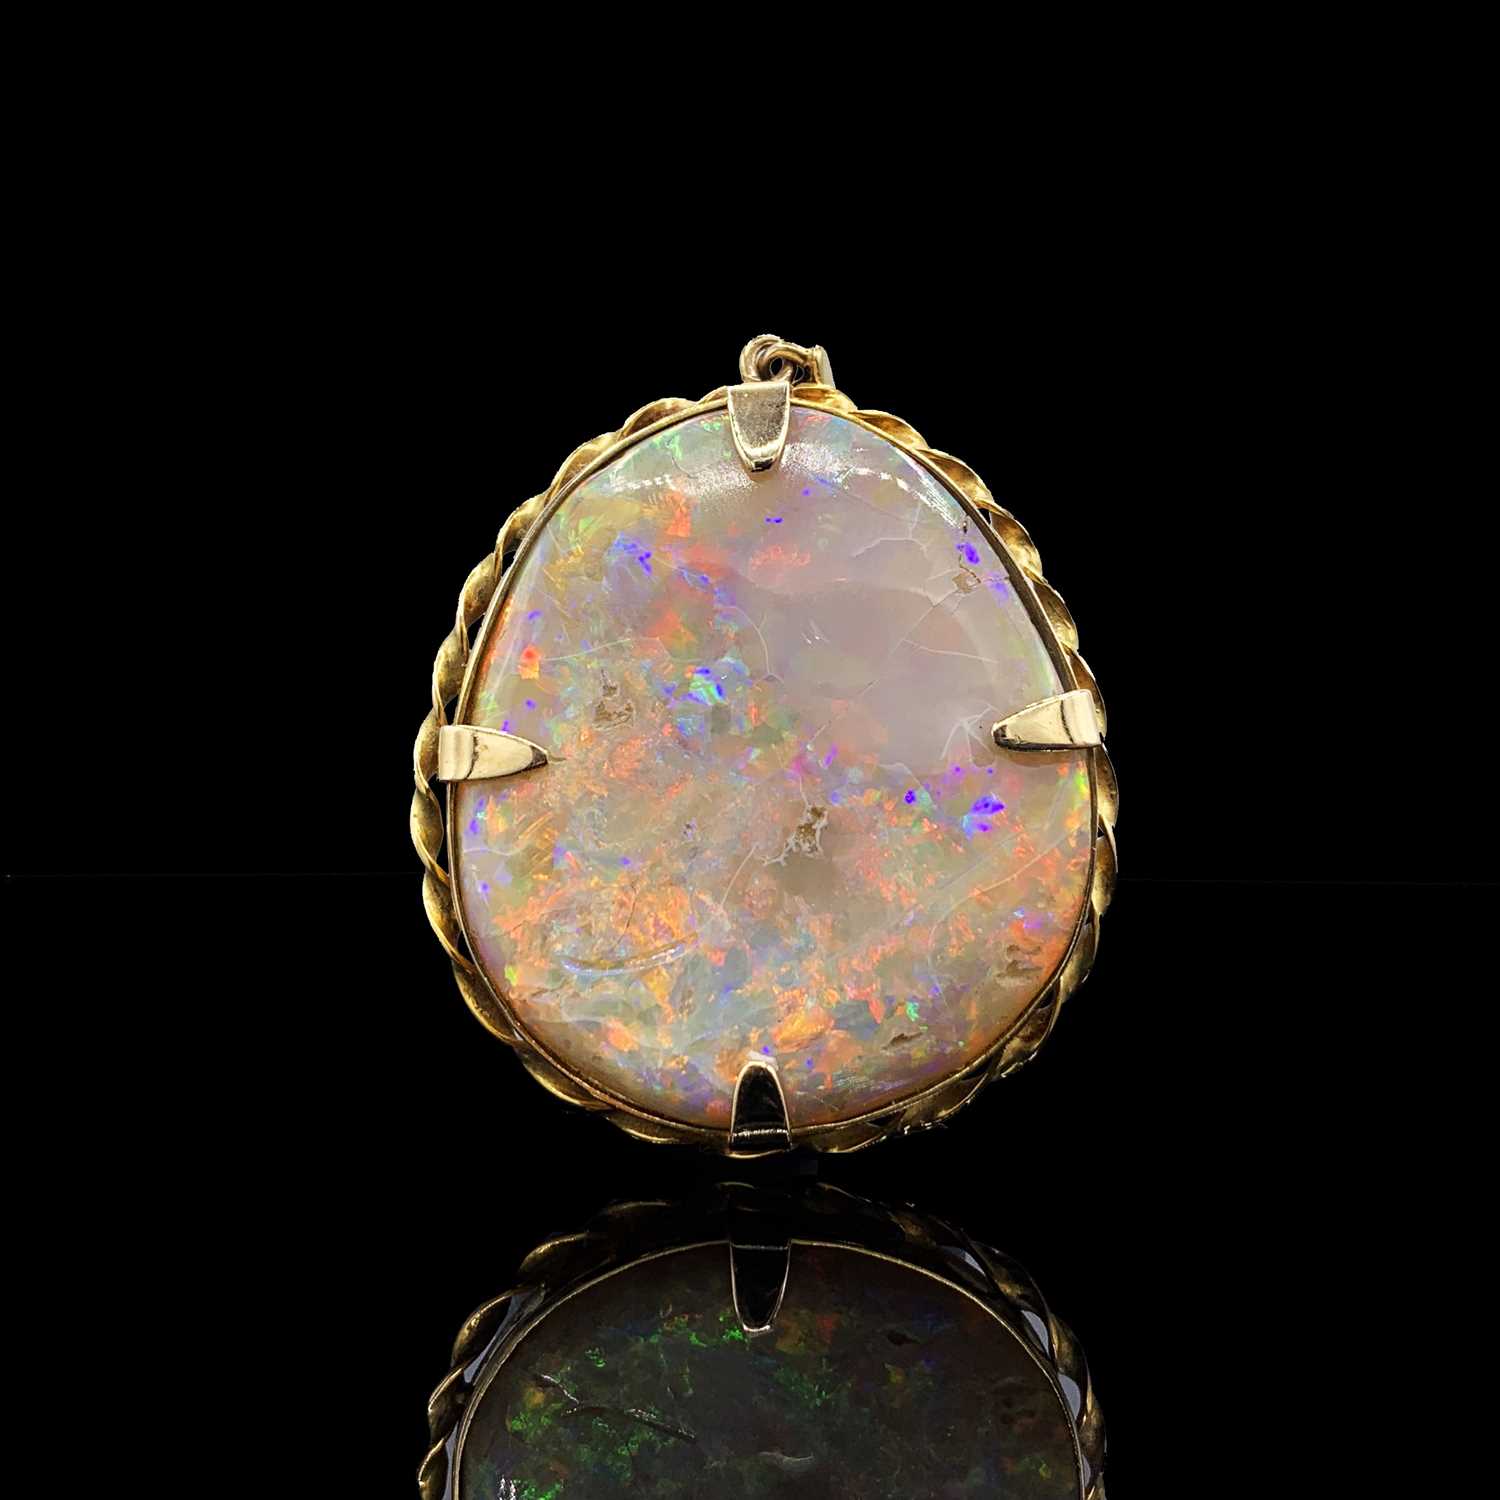 Lot 97 - A gold-mounted opal pendant/brooch 44mm 17.9gm